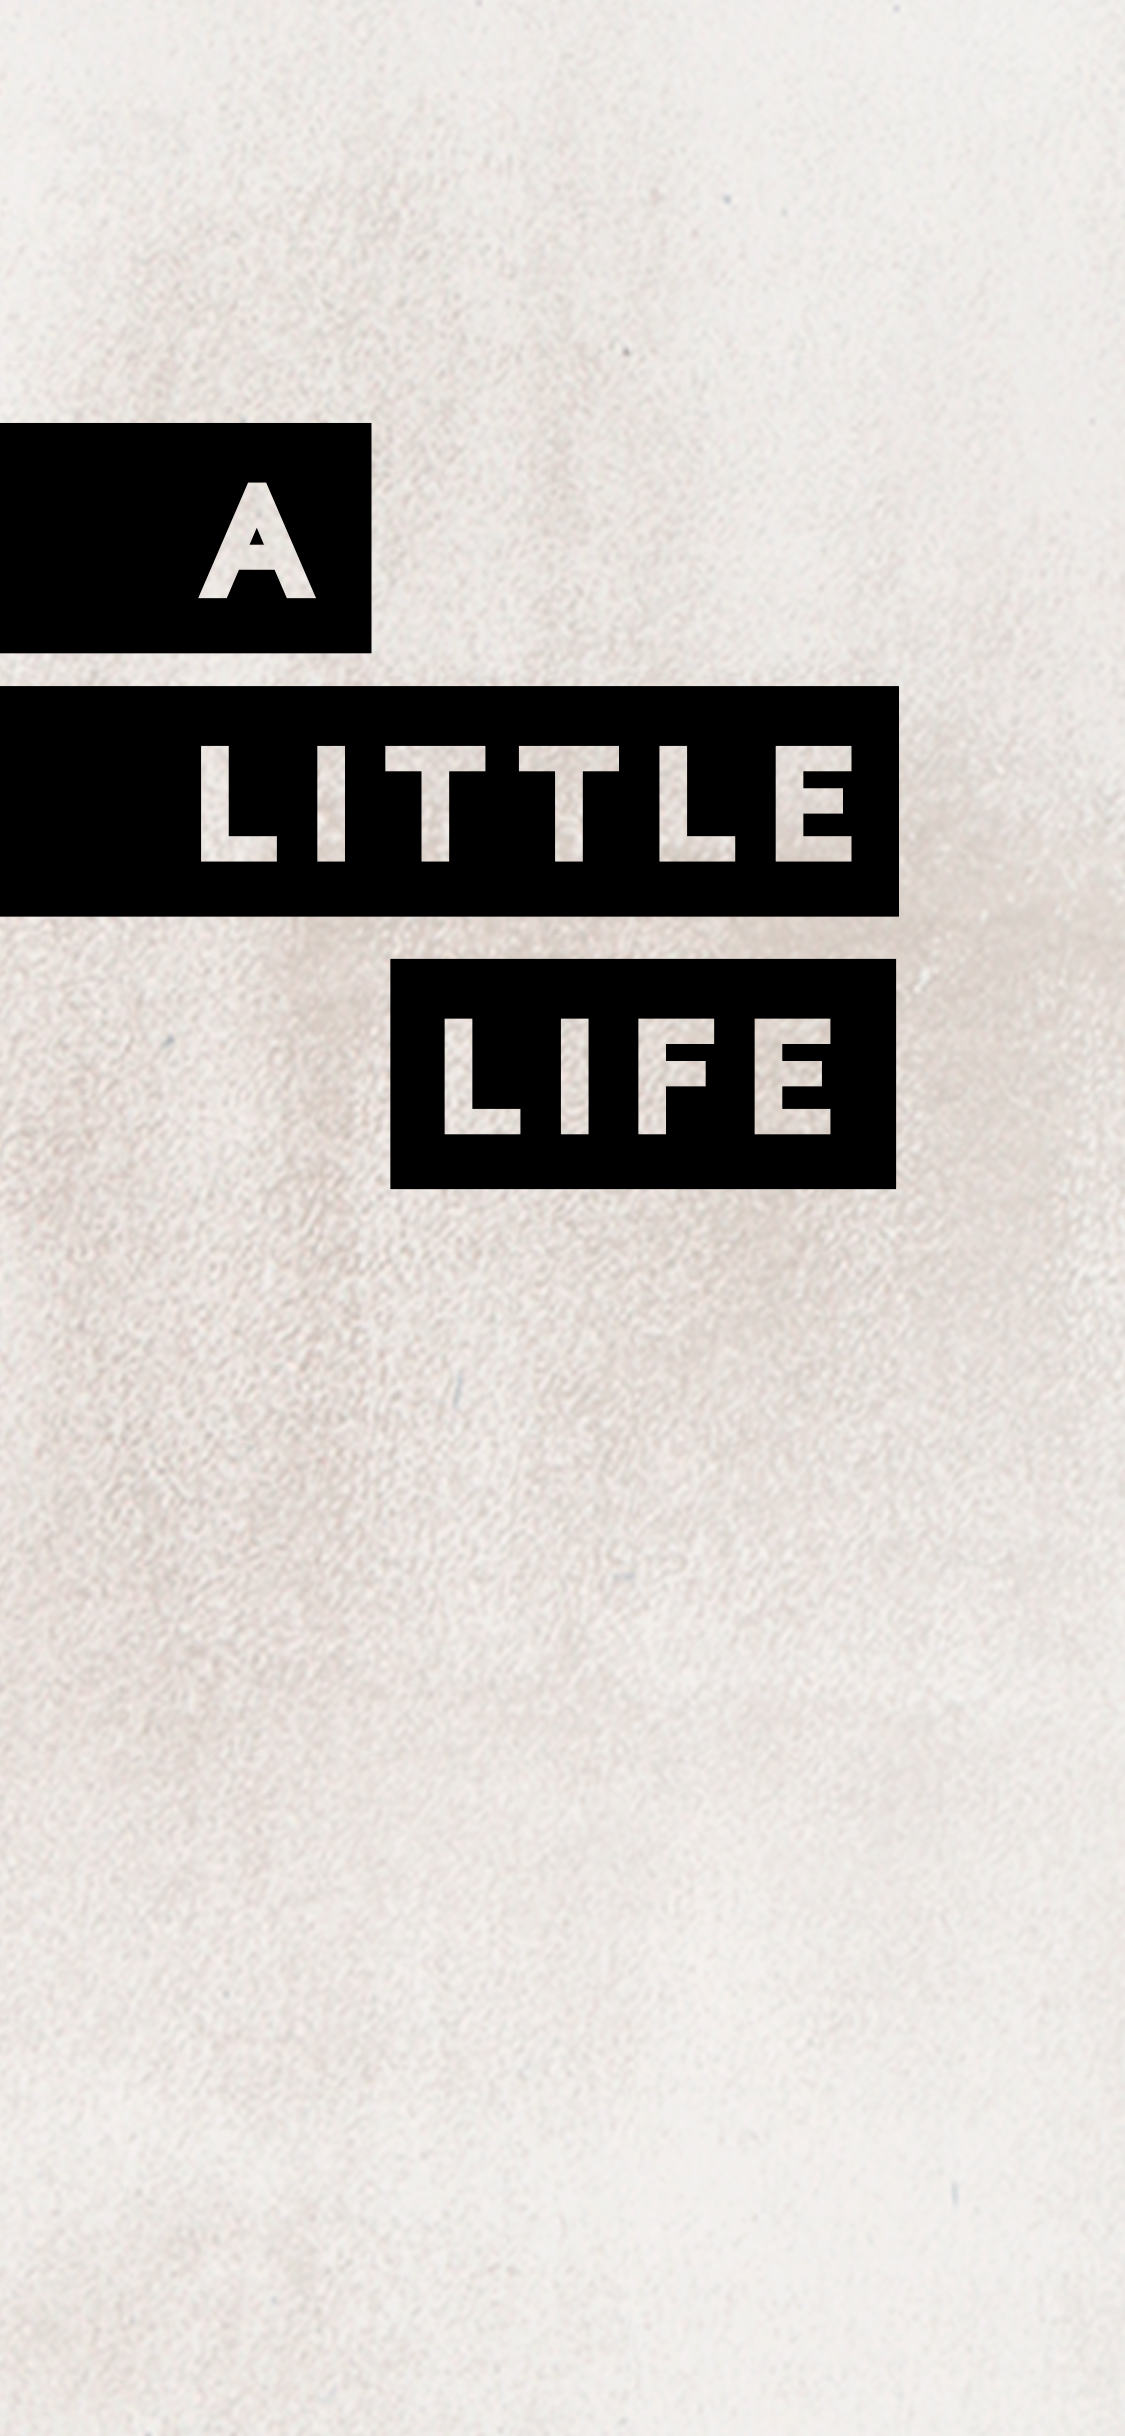 Cast & Creative - A Little Life